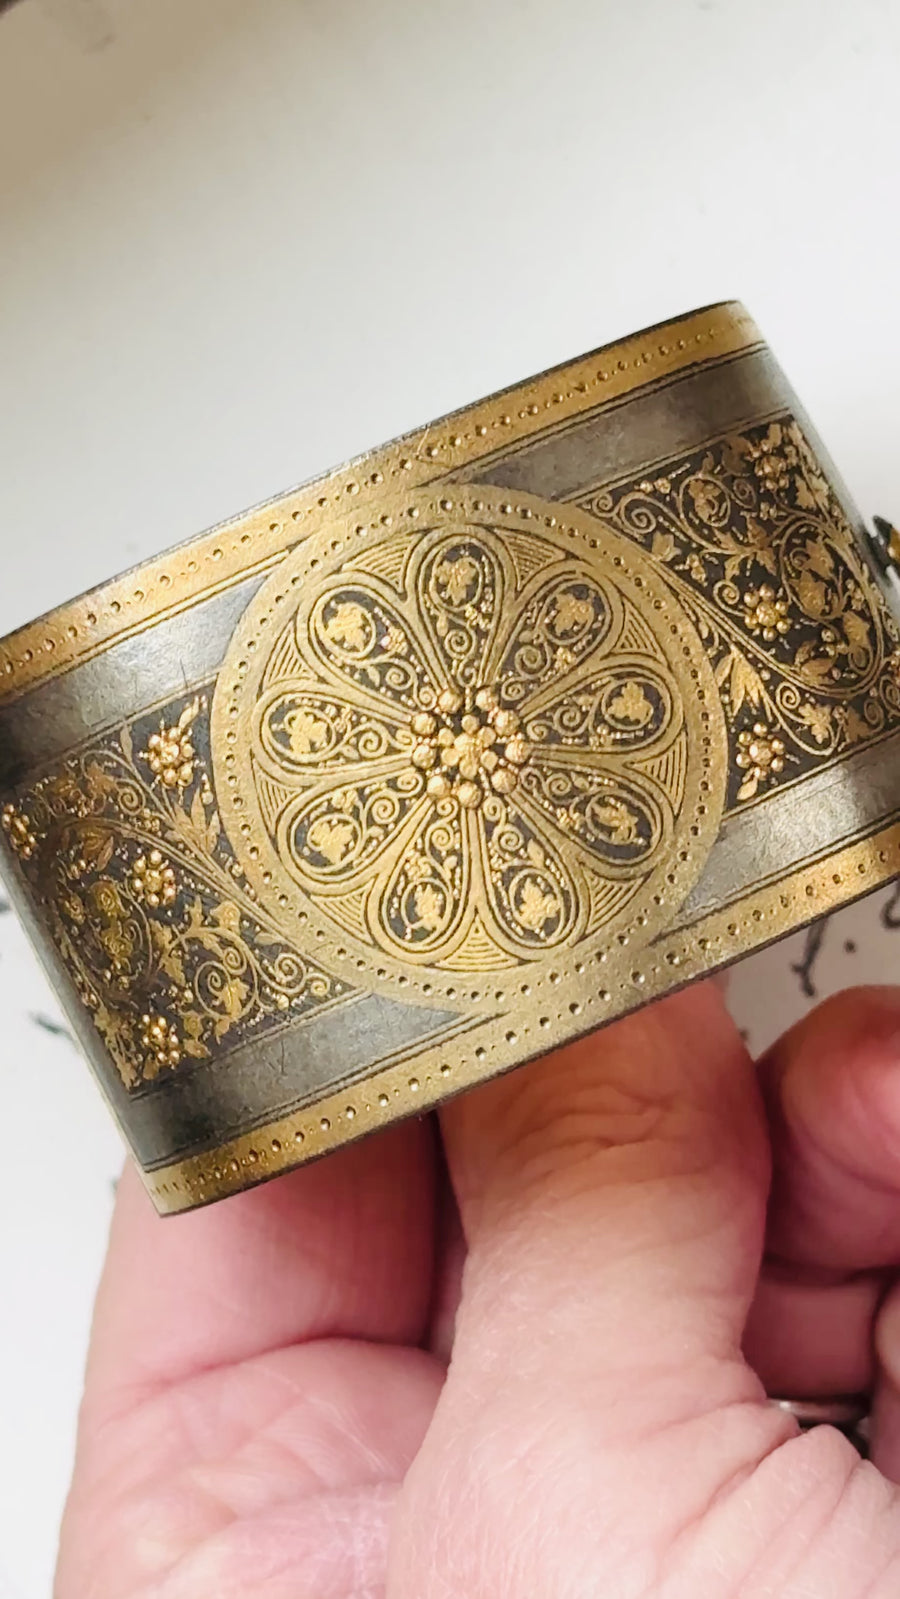 Antique Gold Cuff Bracelet